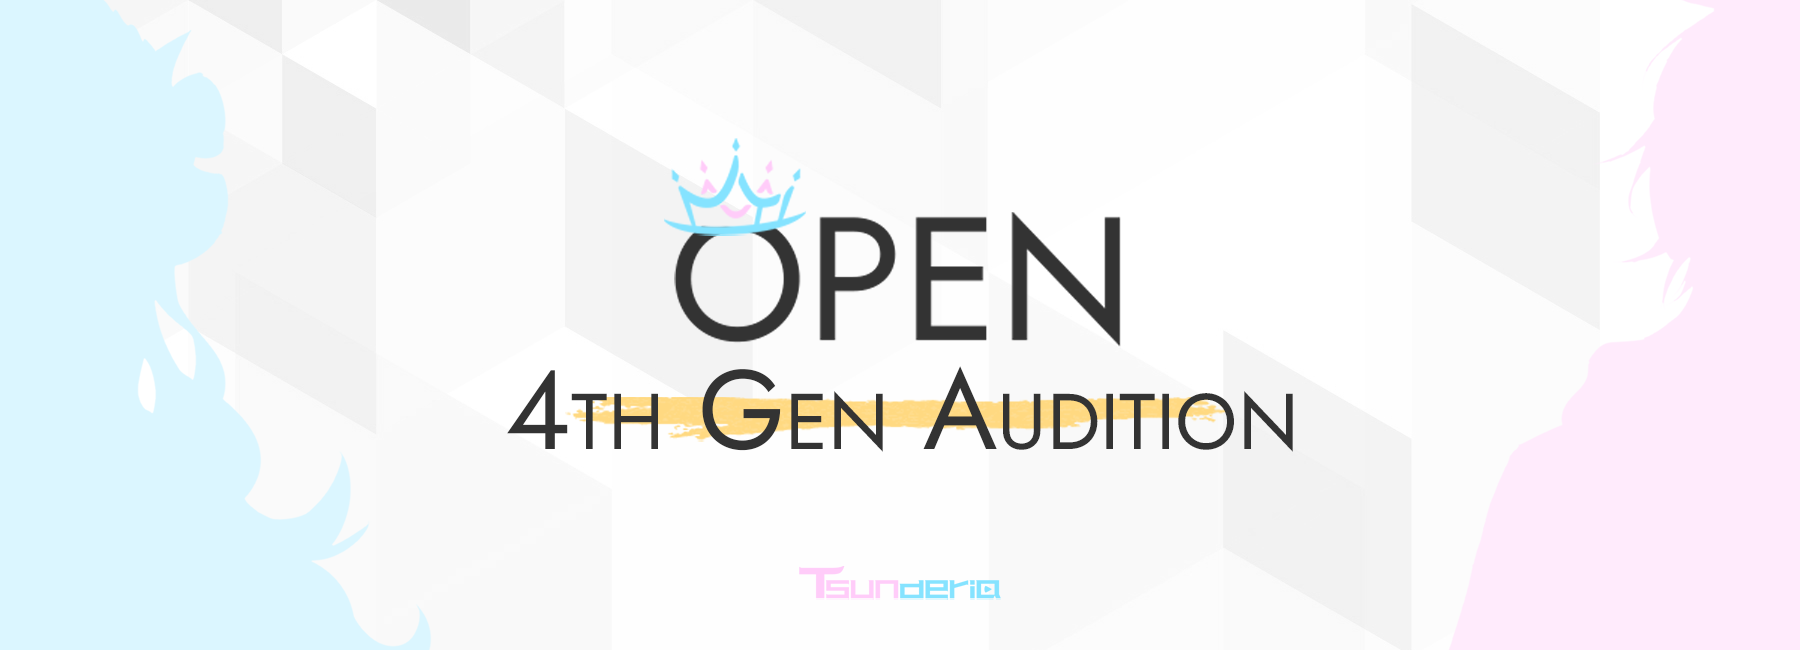 Open 4th Gen Audition